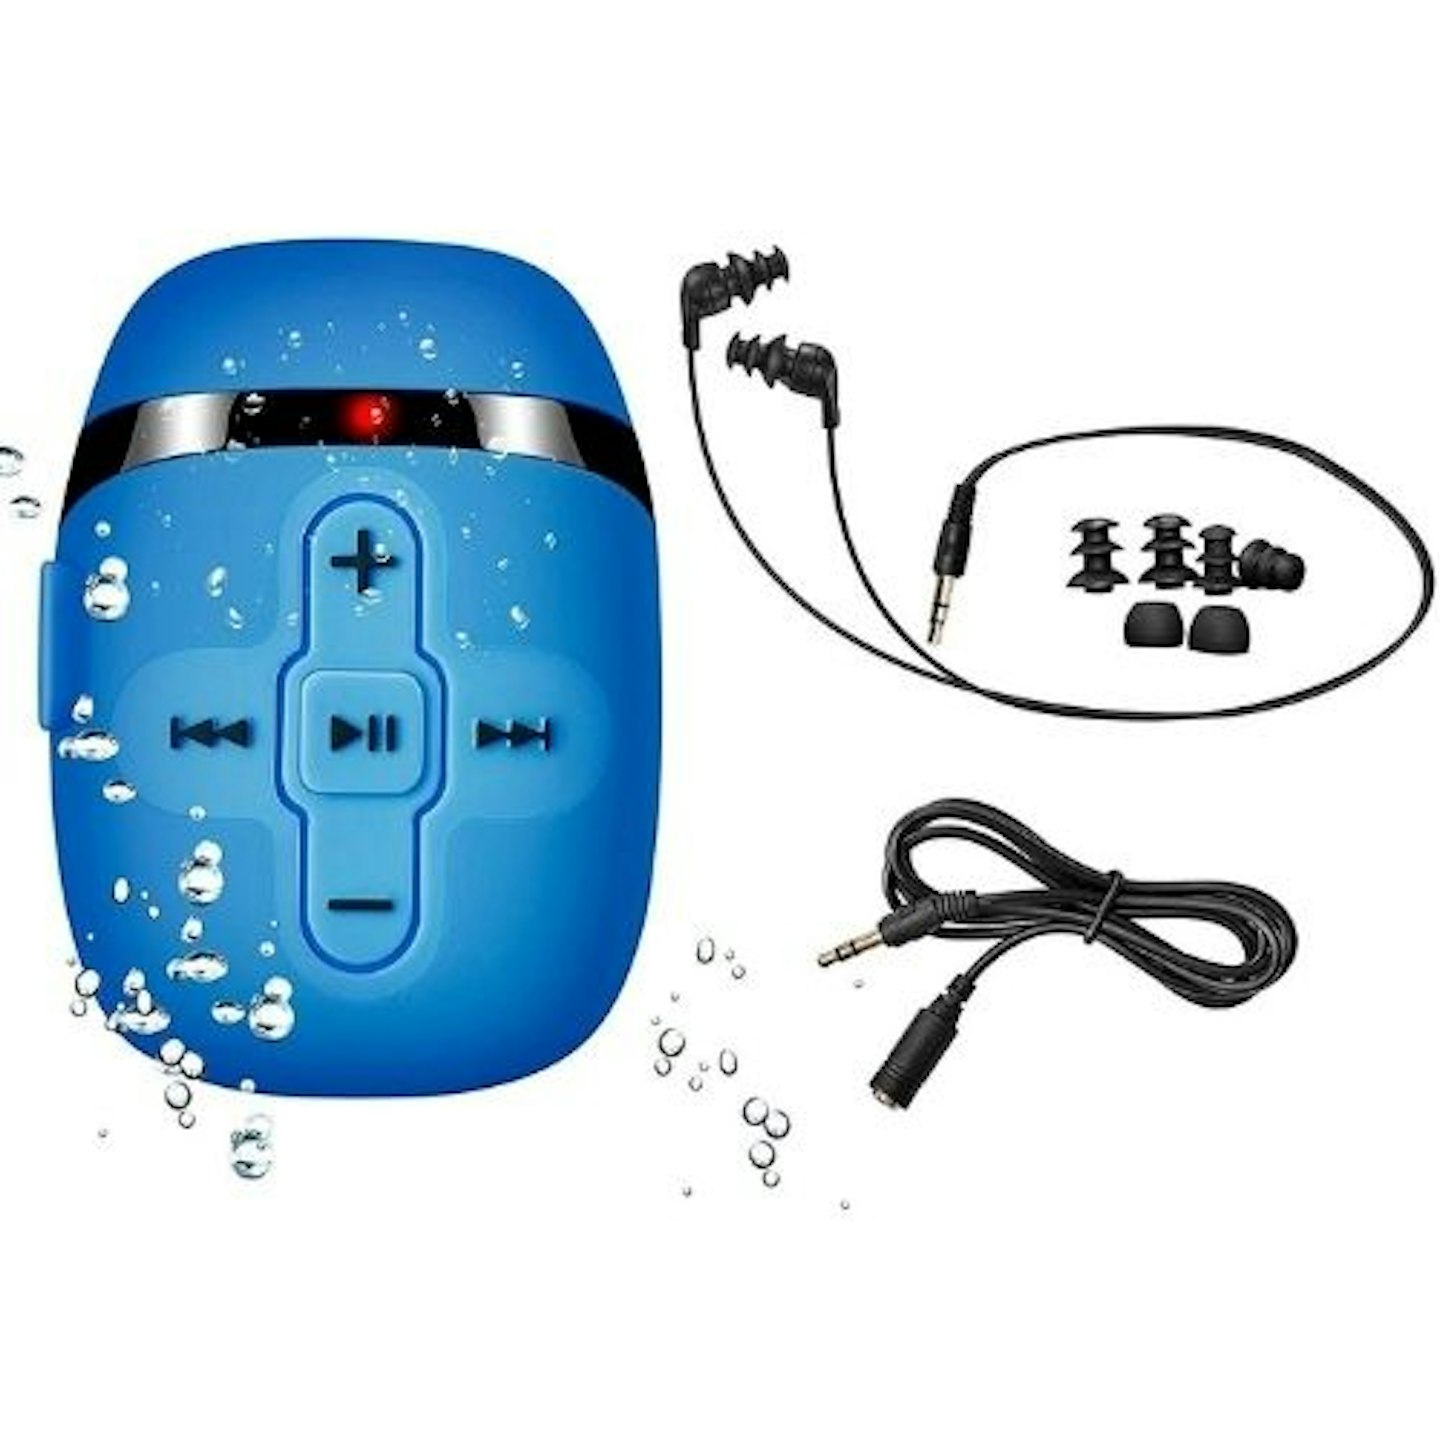 8GB HIFI Sound Waterproof MP3 player